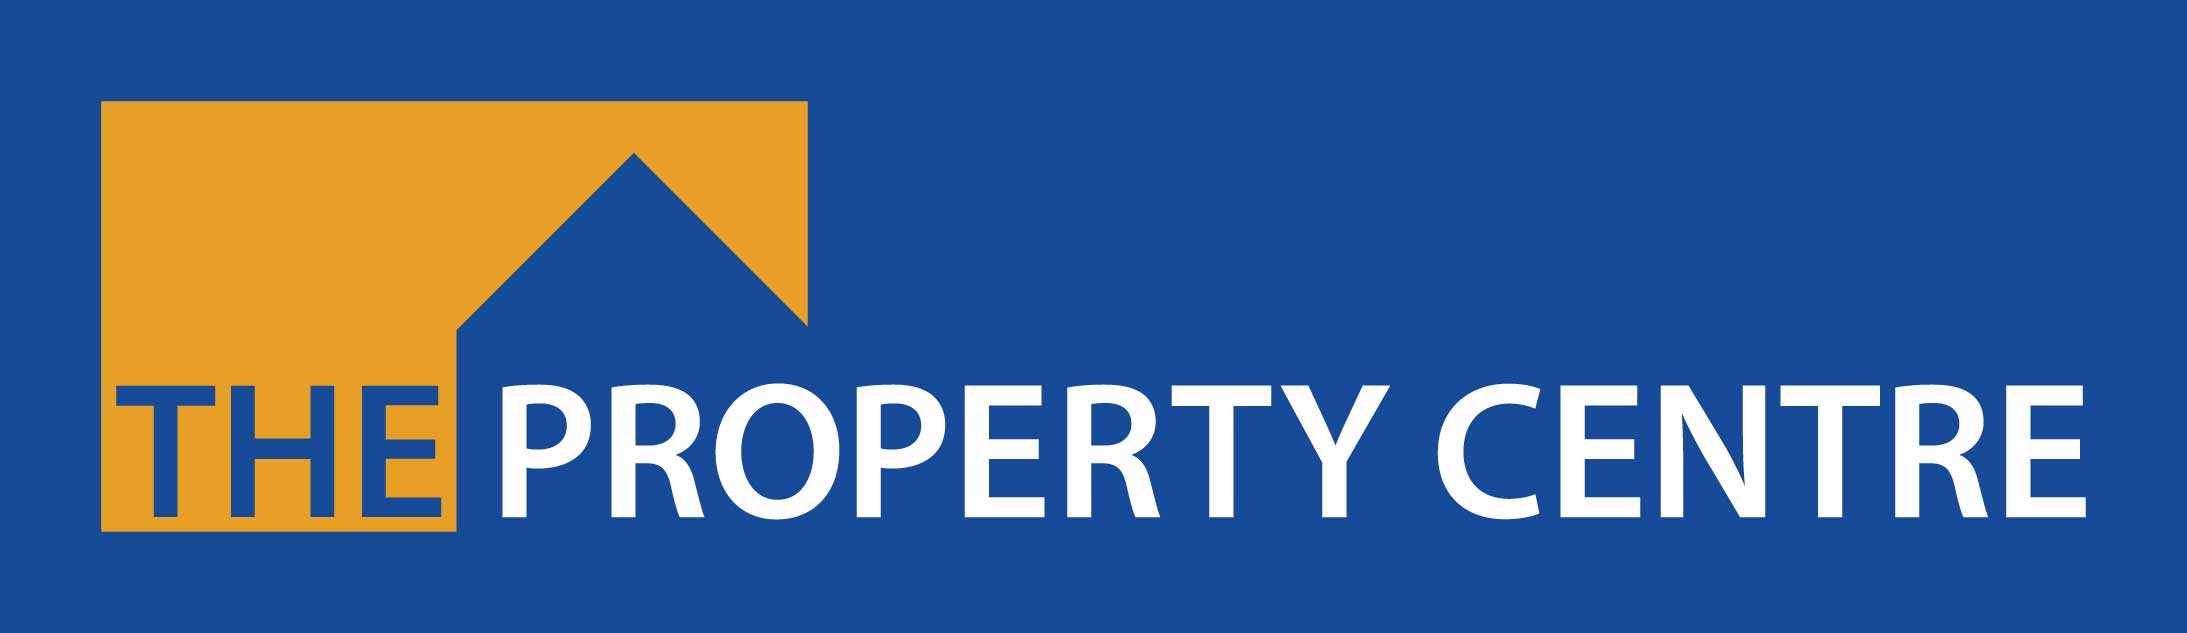 The Property Centre Logo